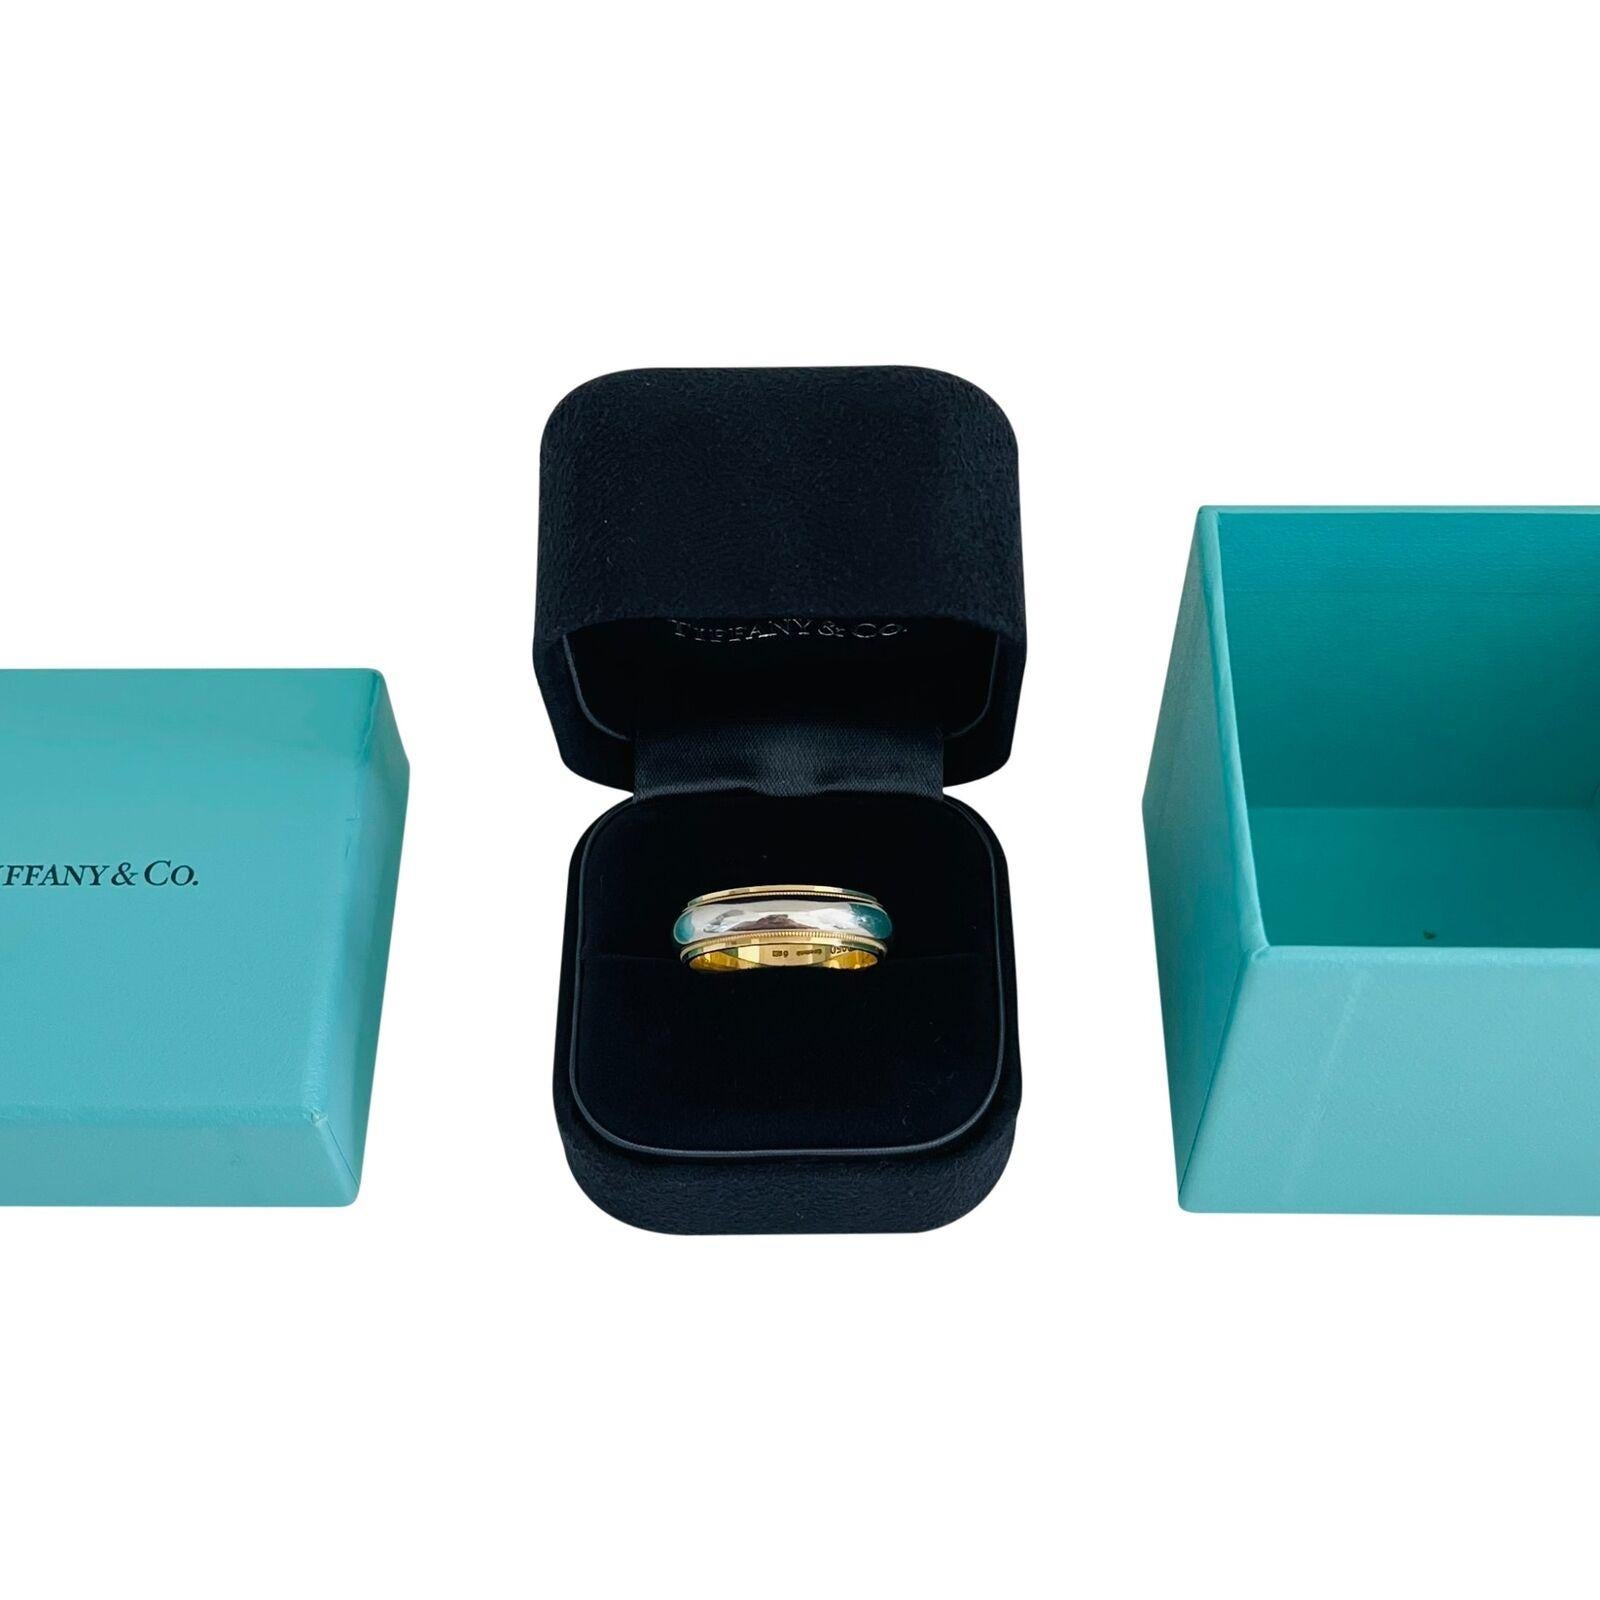 Tiffany & Co. 18 Karat Yellow Gold & Platinum Wedding Band Ring with Box 2